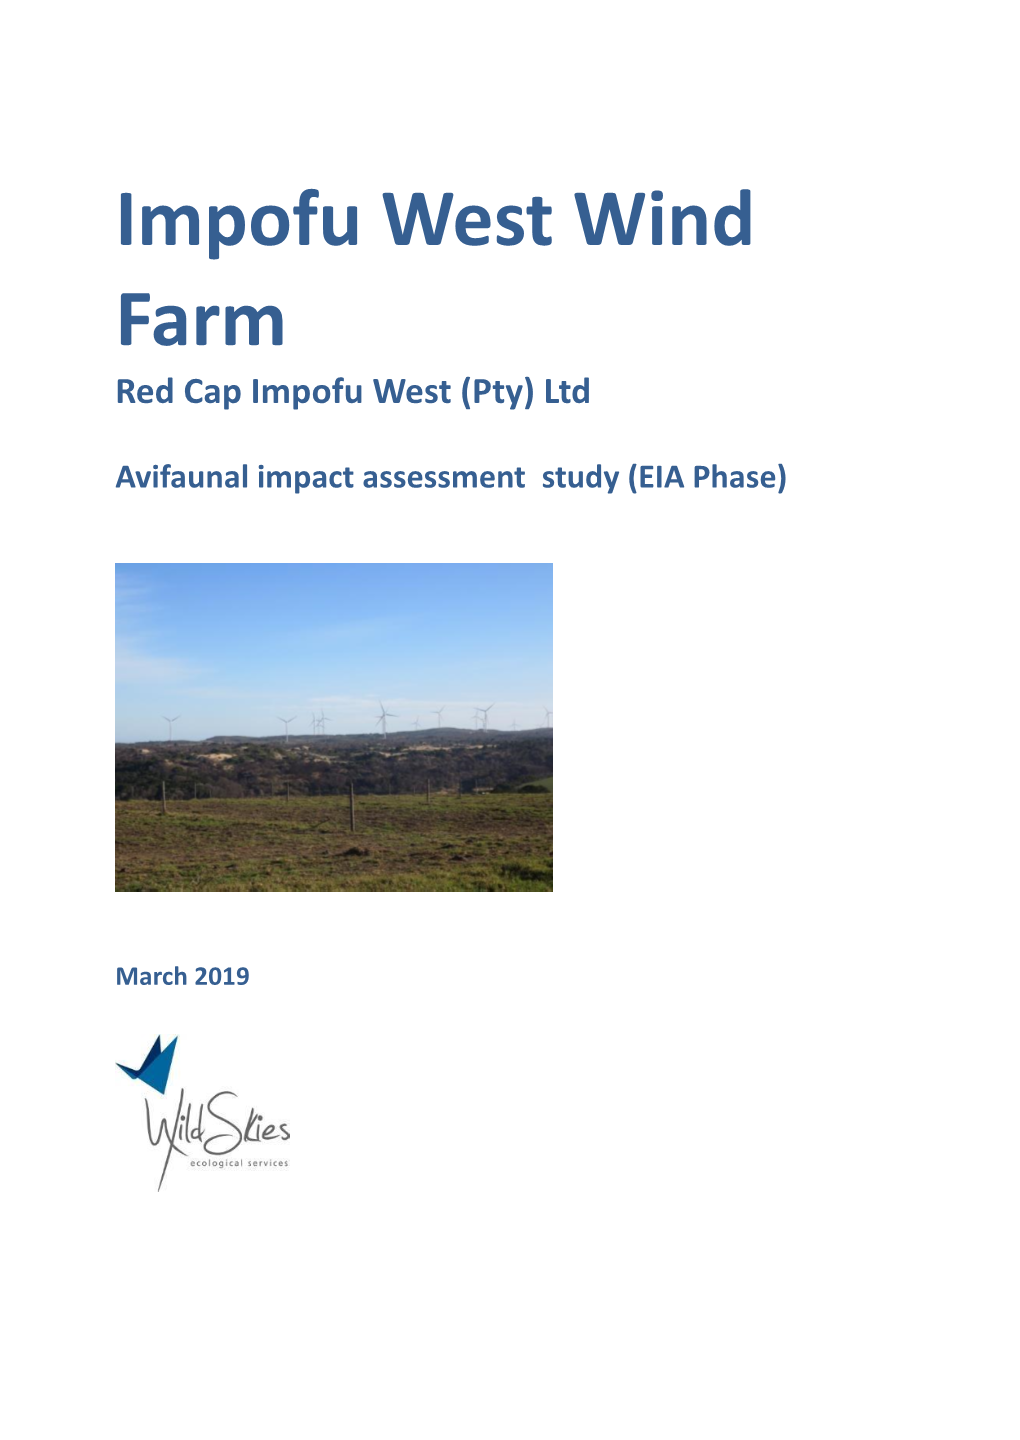 Impofu West Wind Farm Red Cap Impofu West (Pty) Ltd